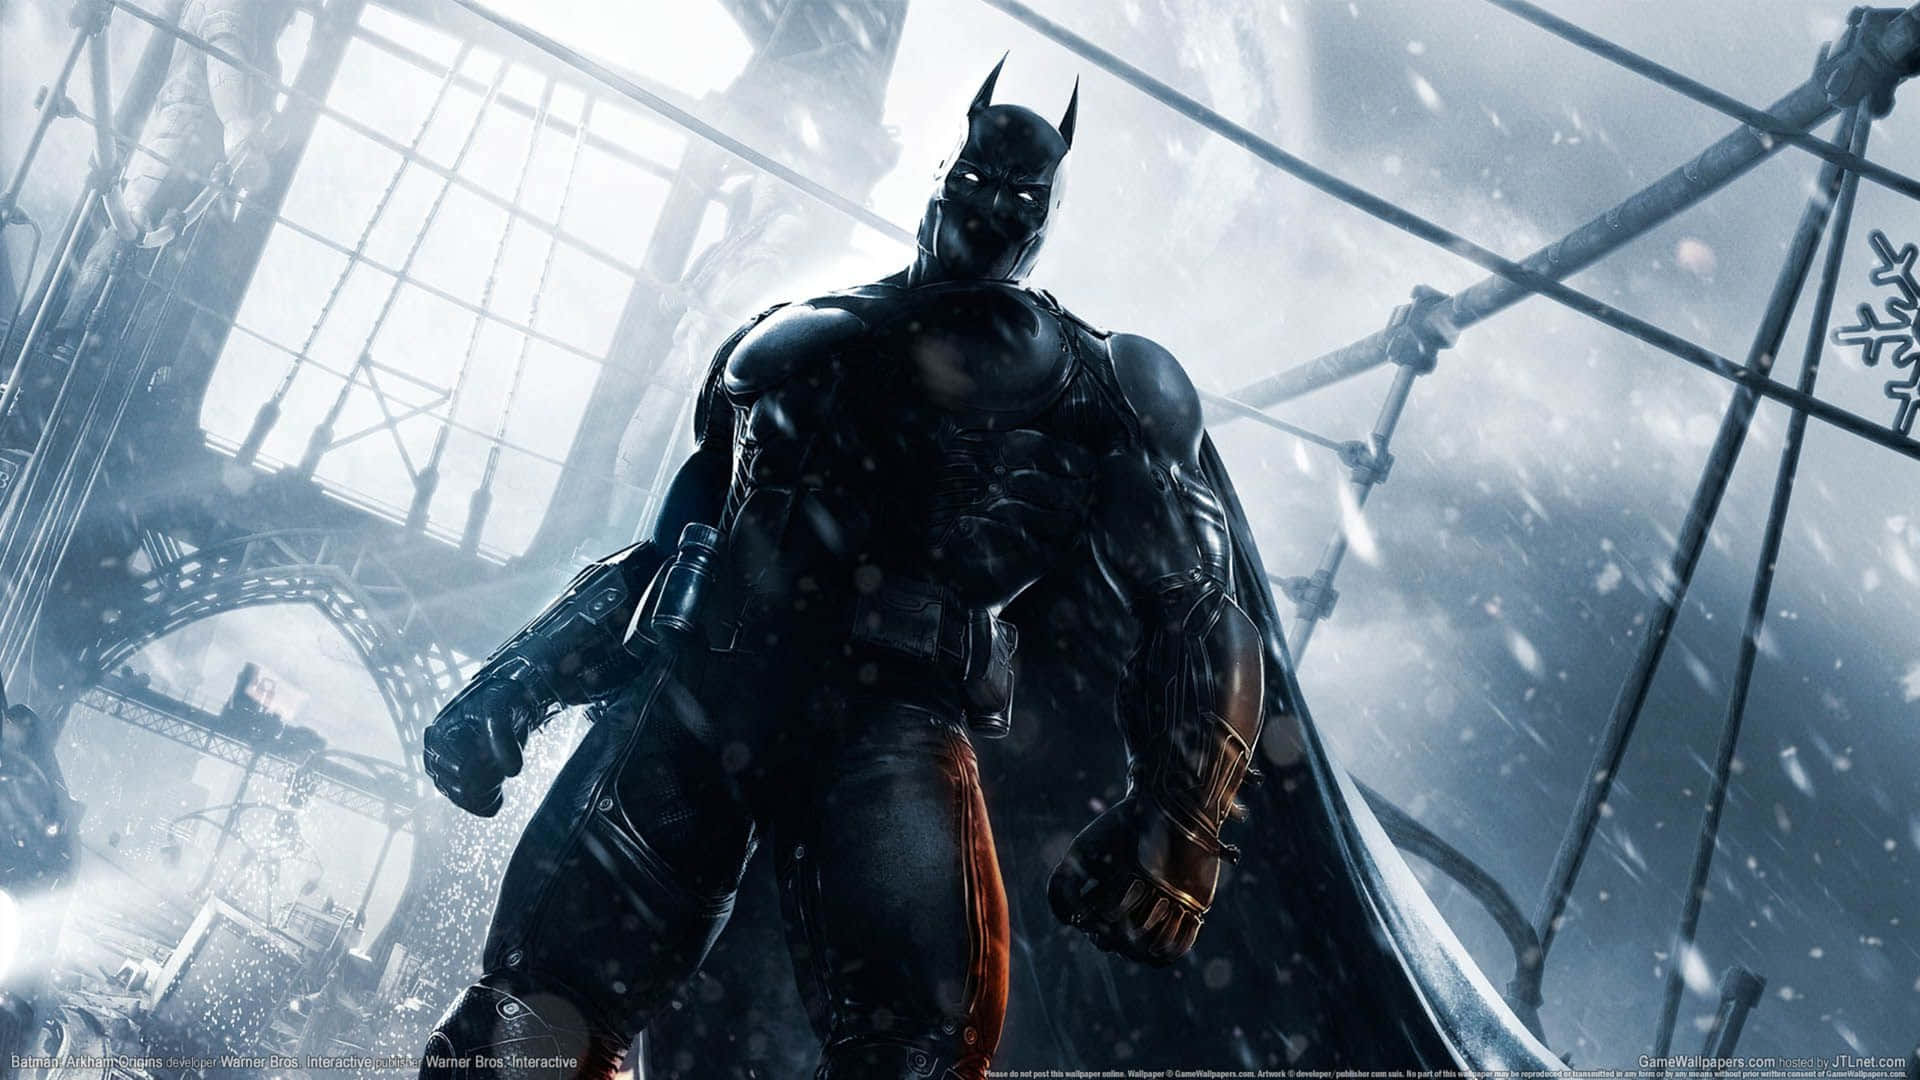 Wallpaper : Batman Arkham Knight, Gamer, Warner Brothers, Batman